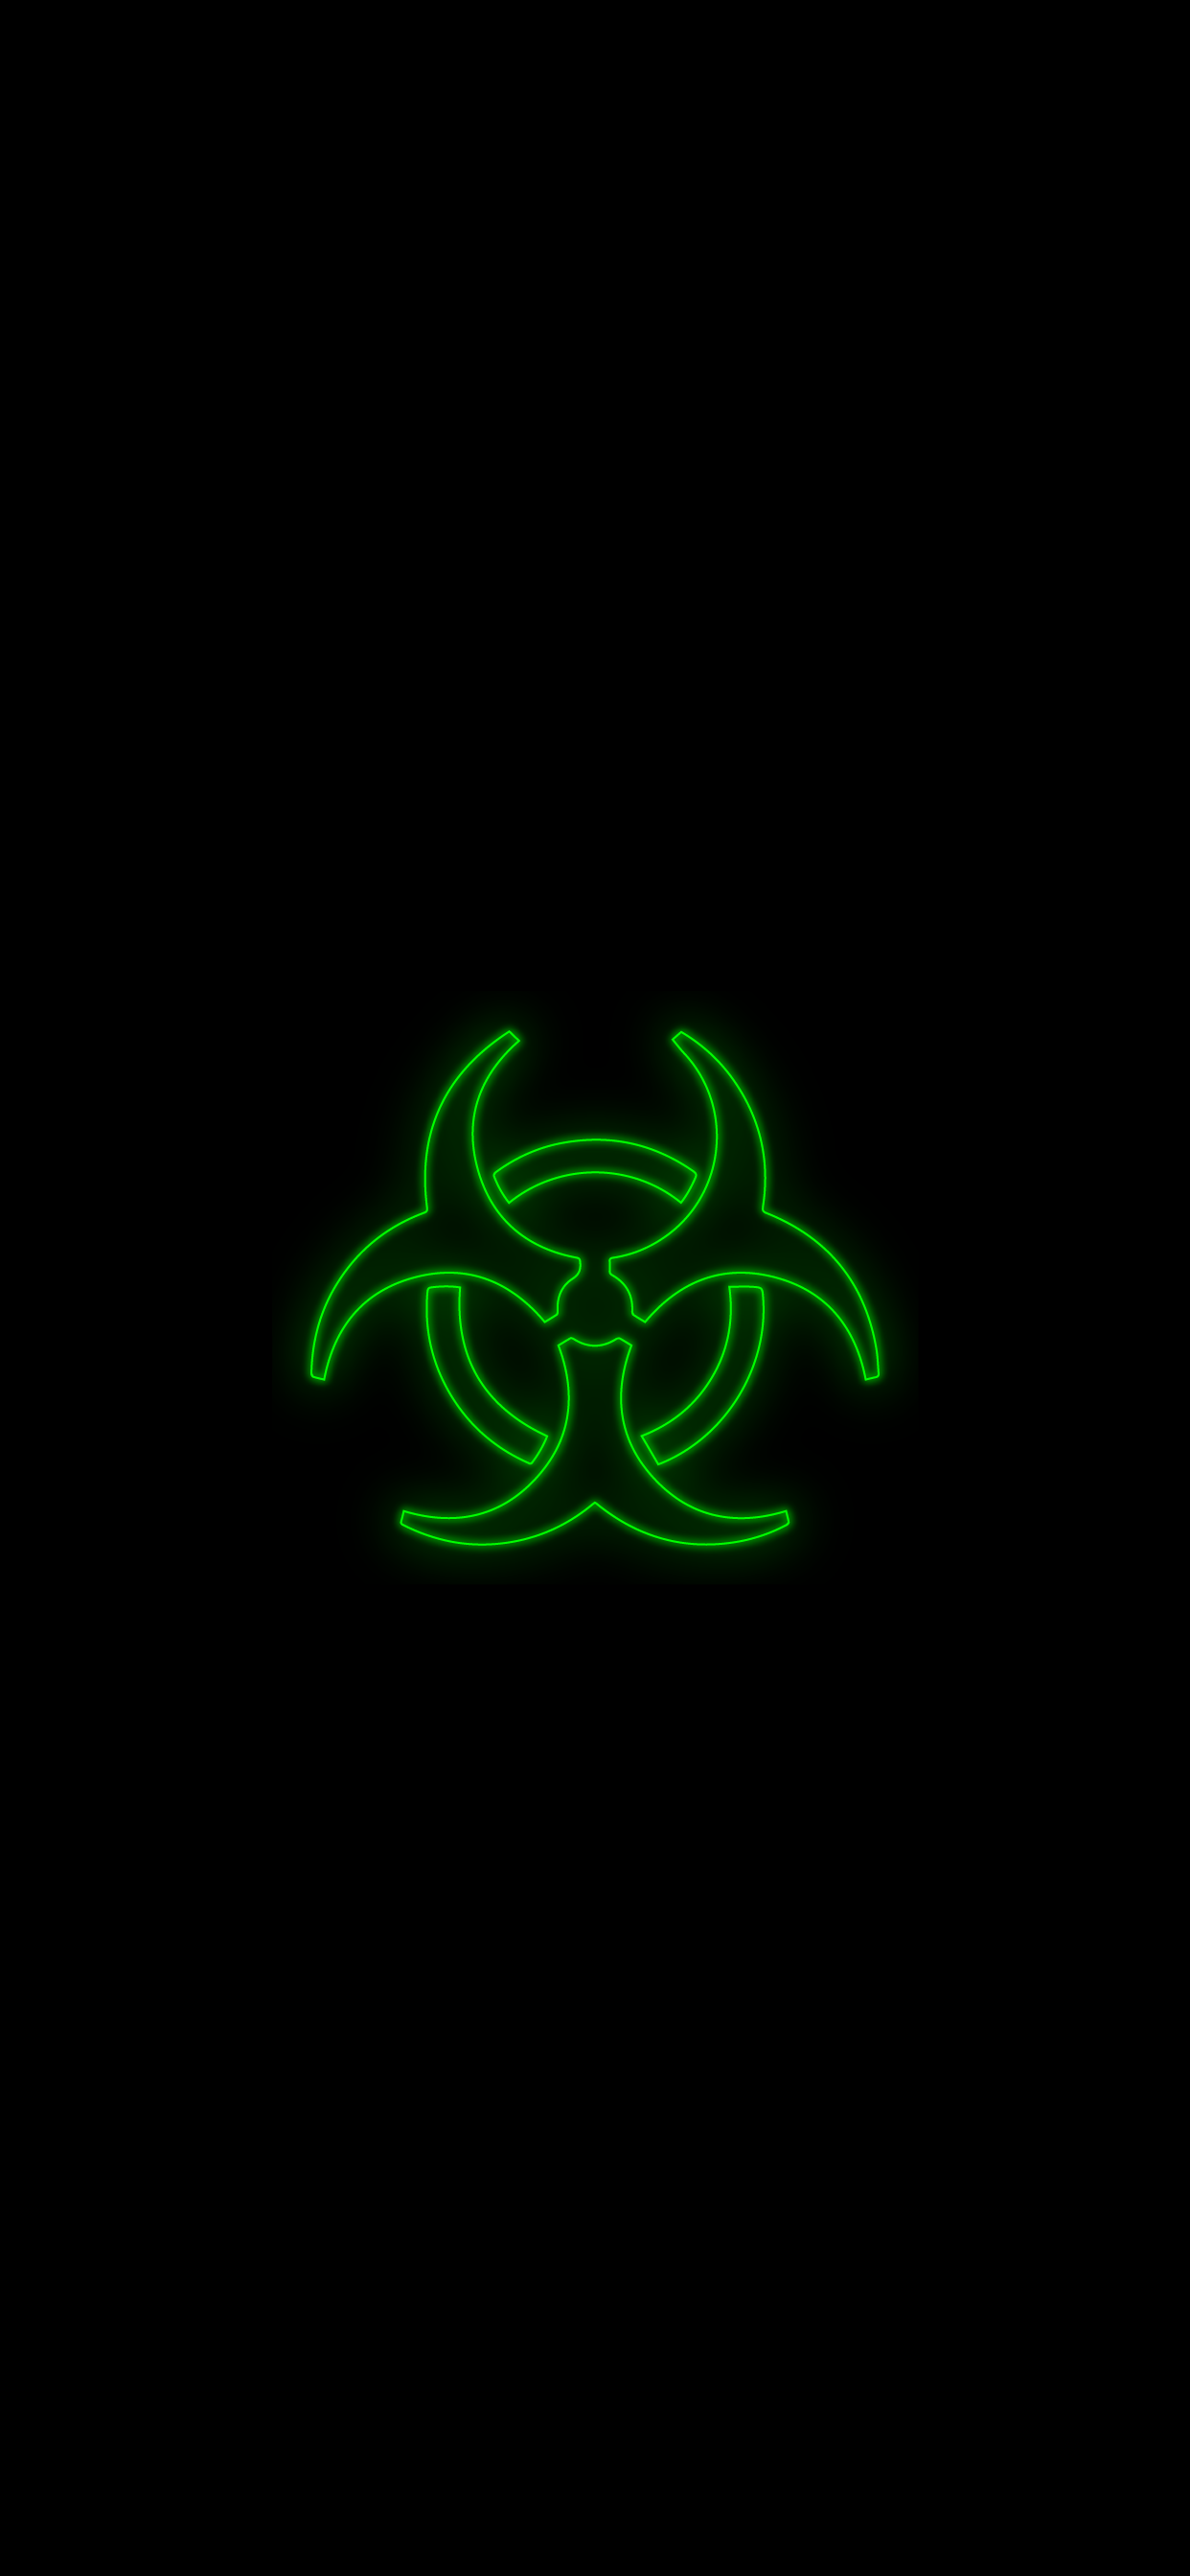 black oled wallpaper, green, symbol, font, technology, logo, graphics, neon, emblem